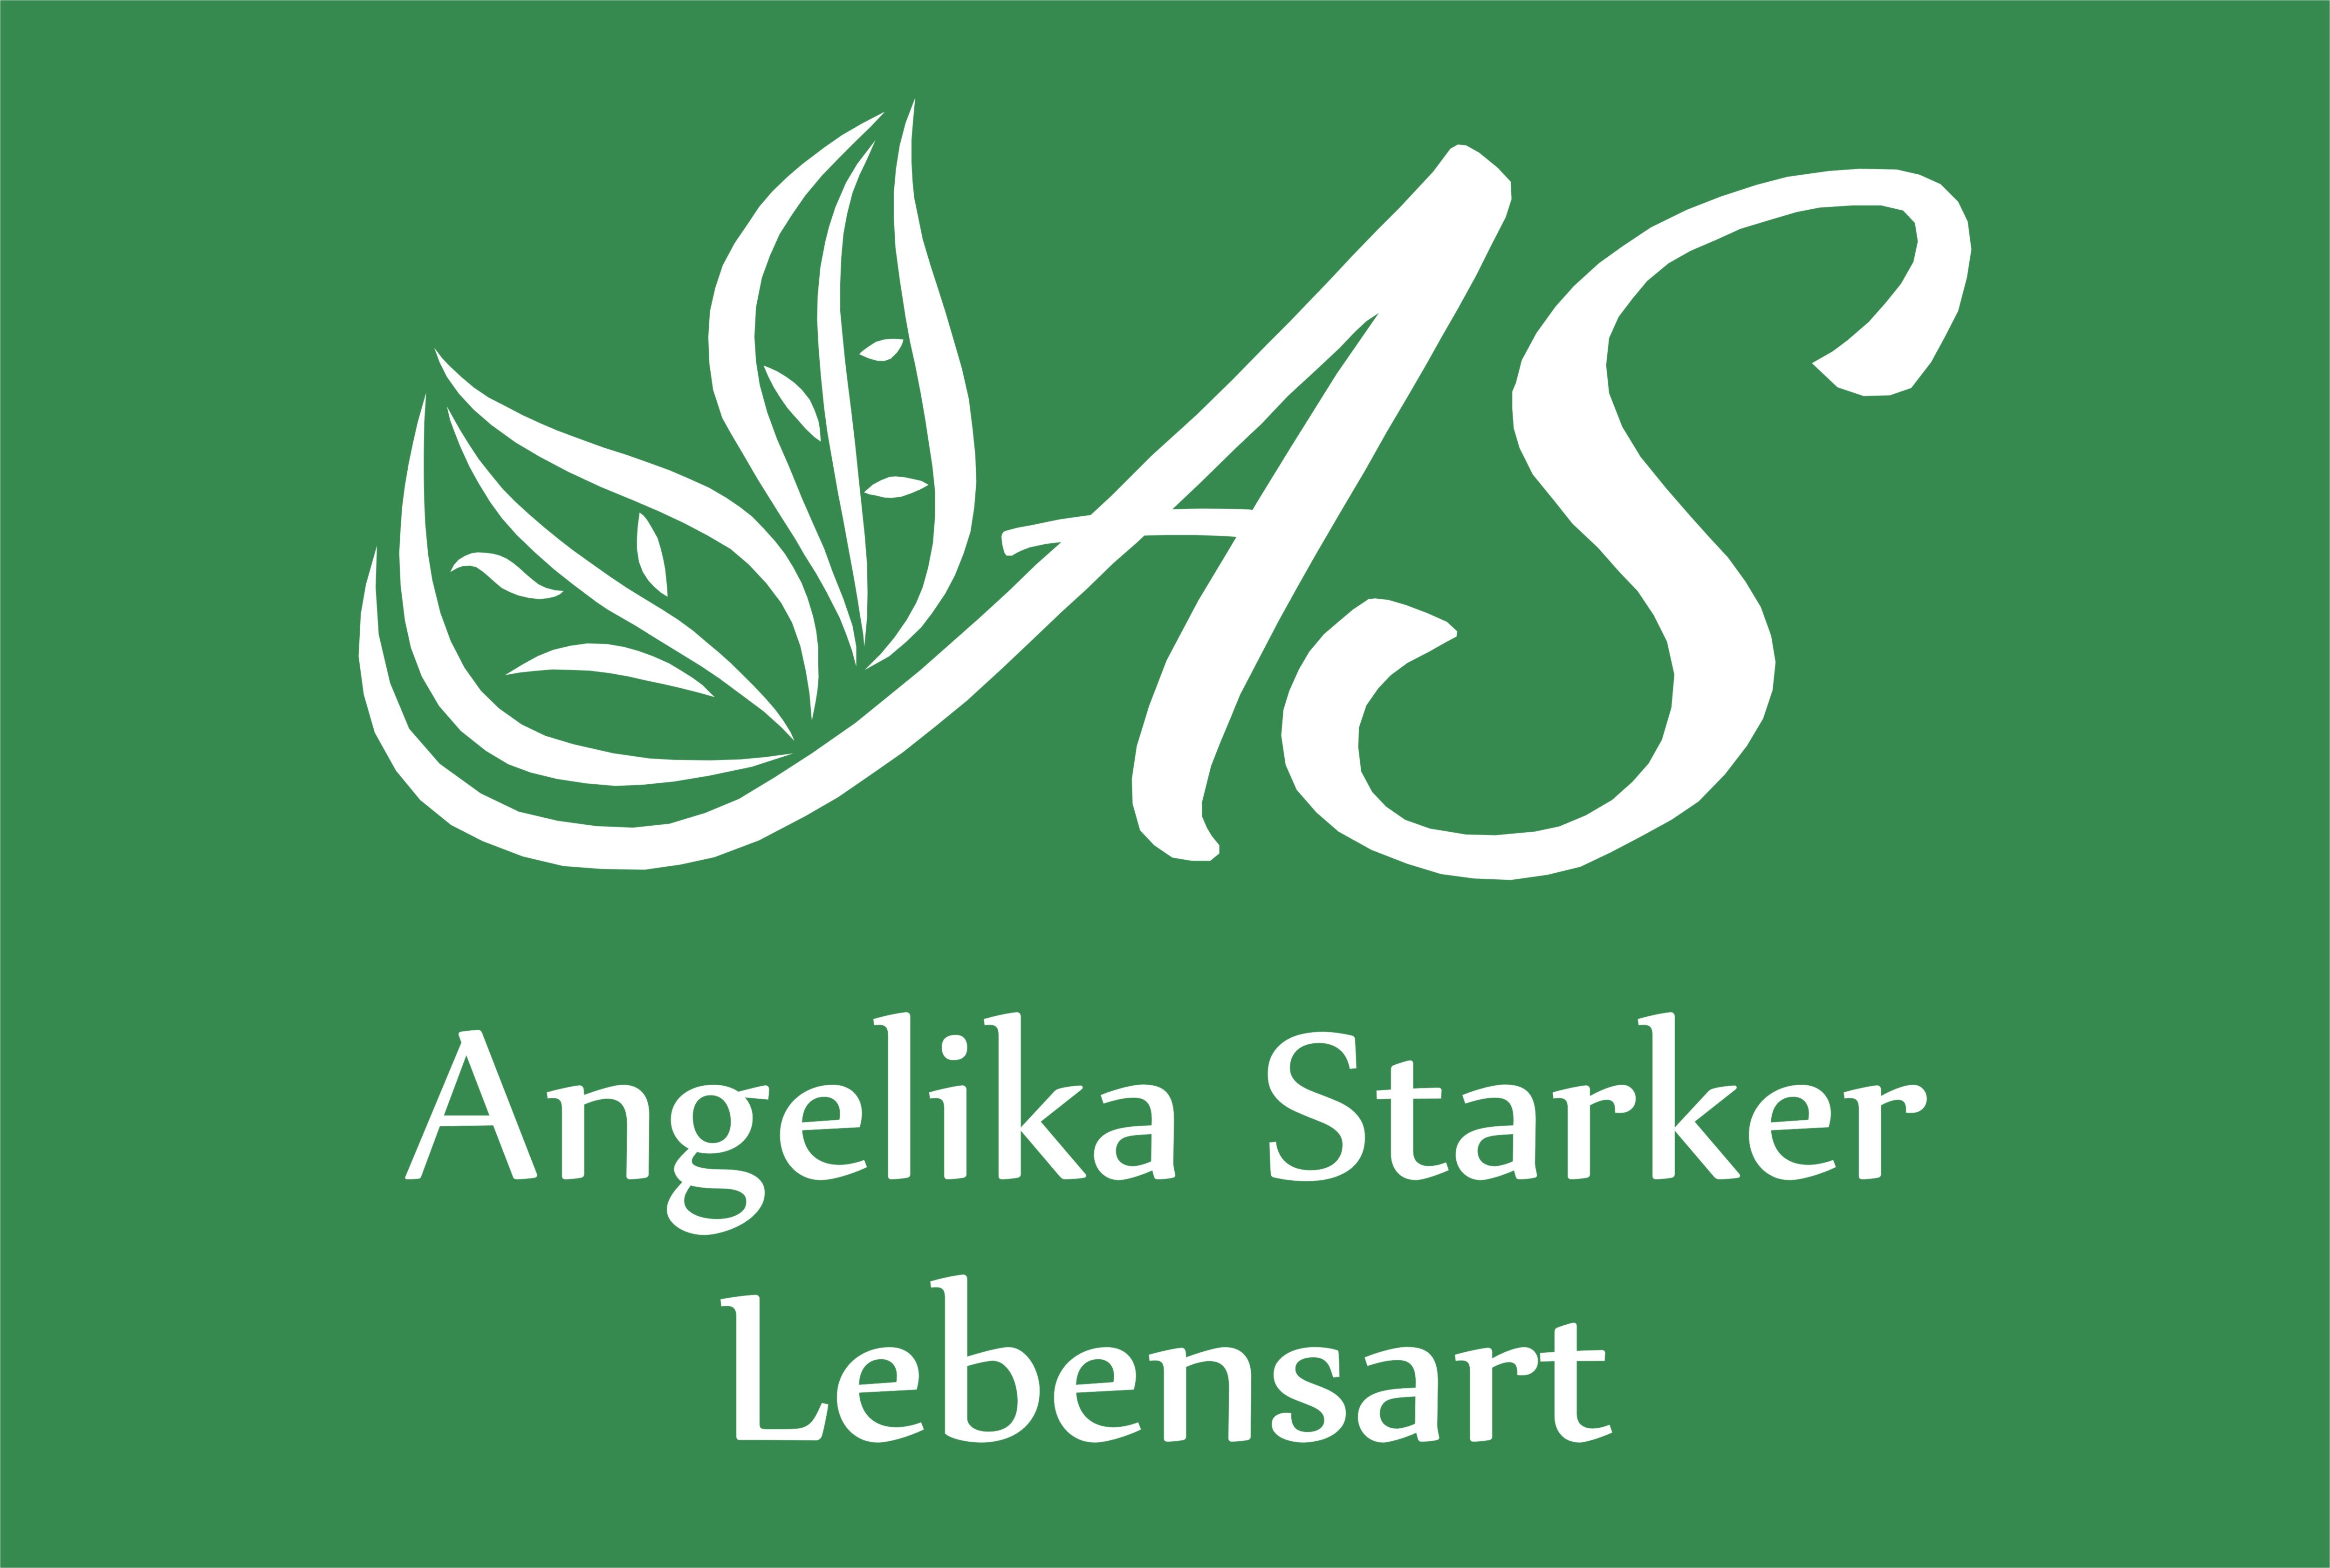 Angelika Starker LebensArt